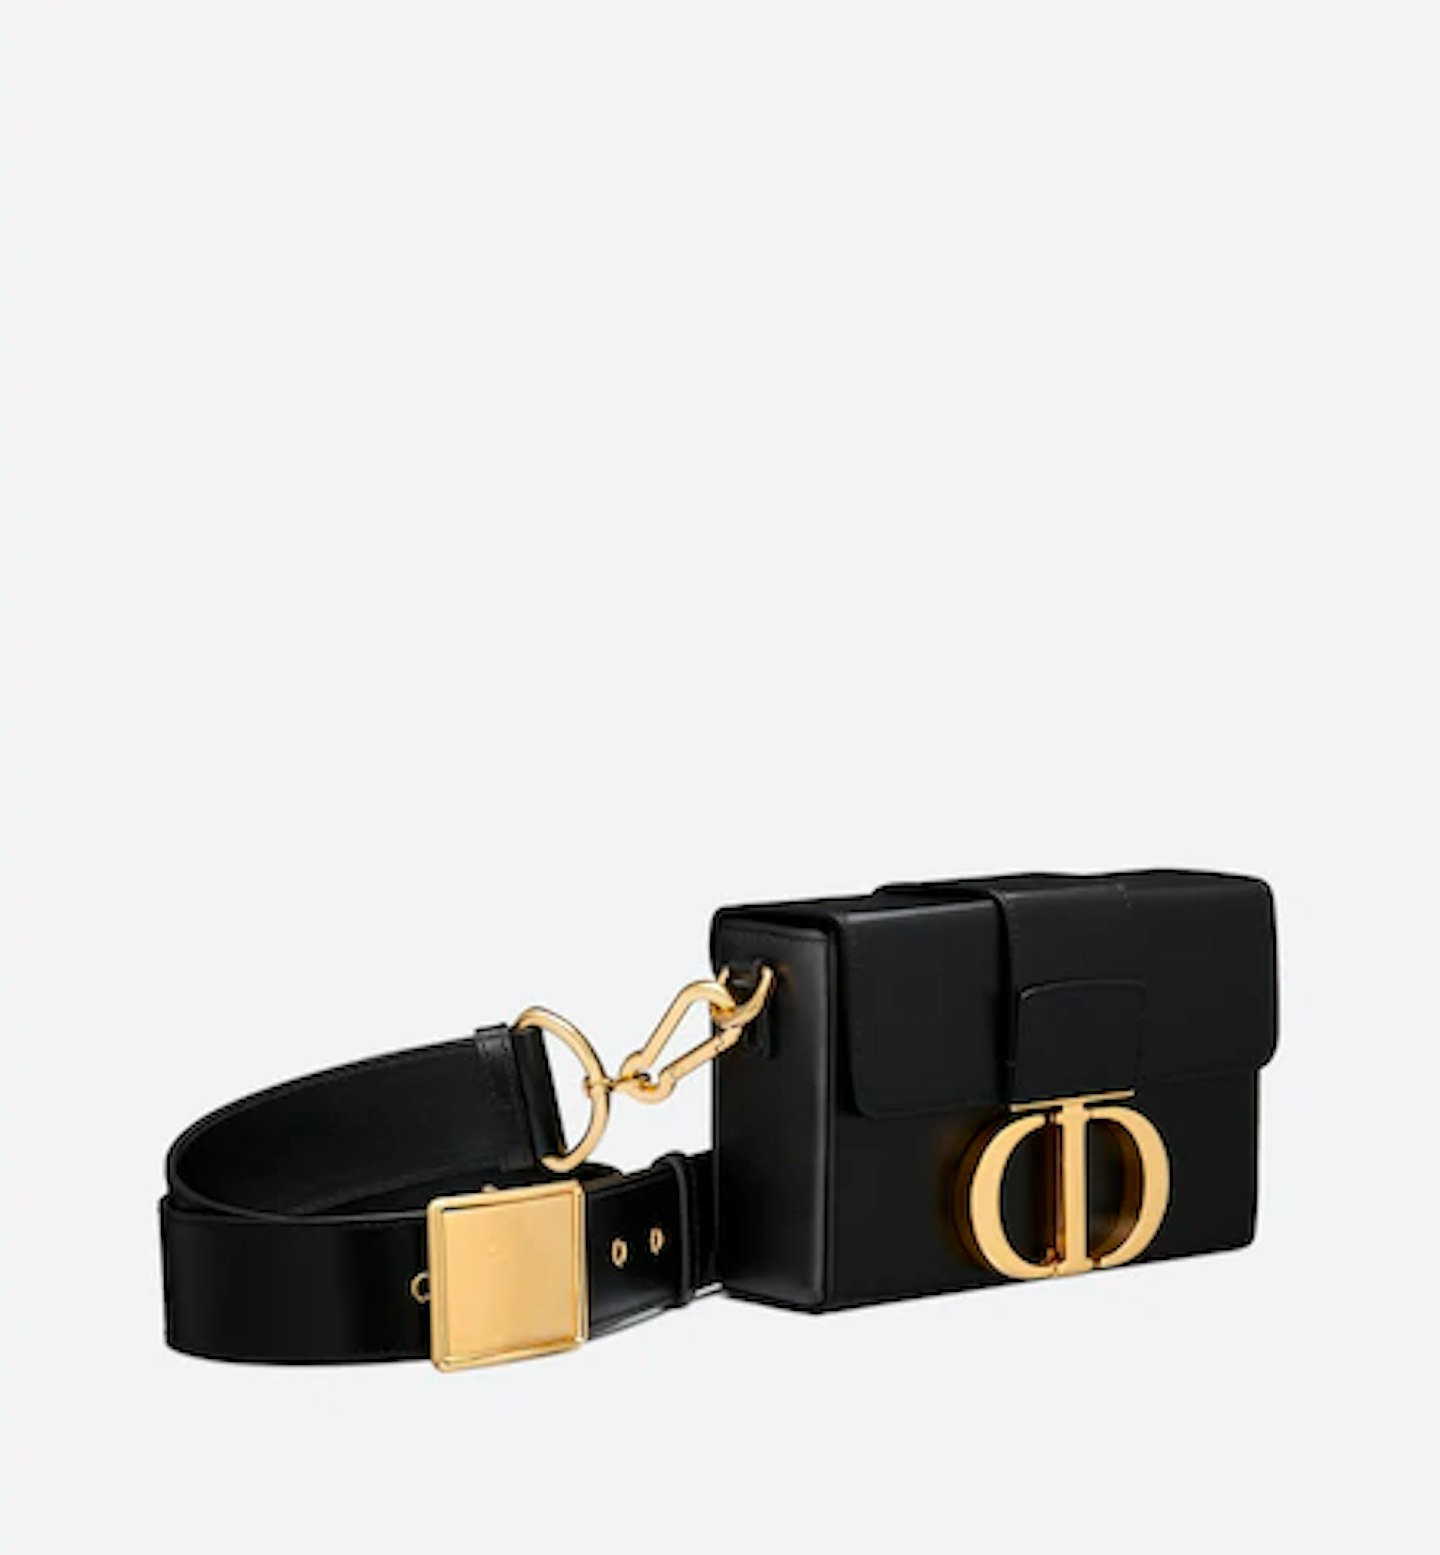 Christian Dior, 30 Montaigne Box Bag, £2,500